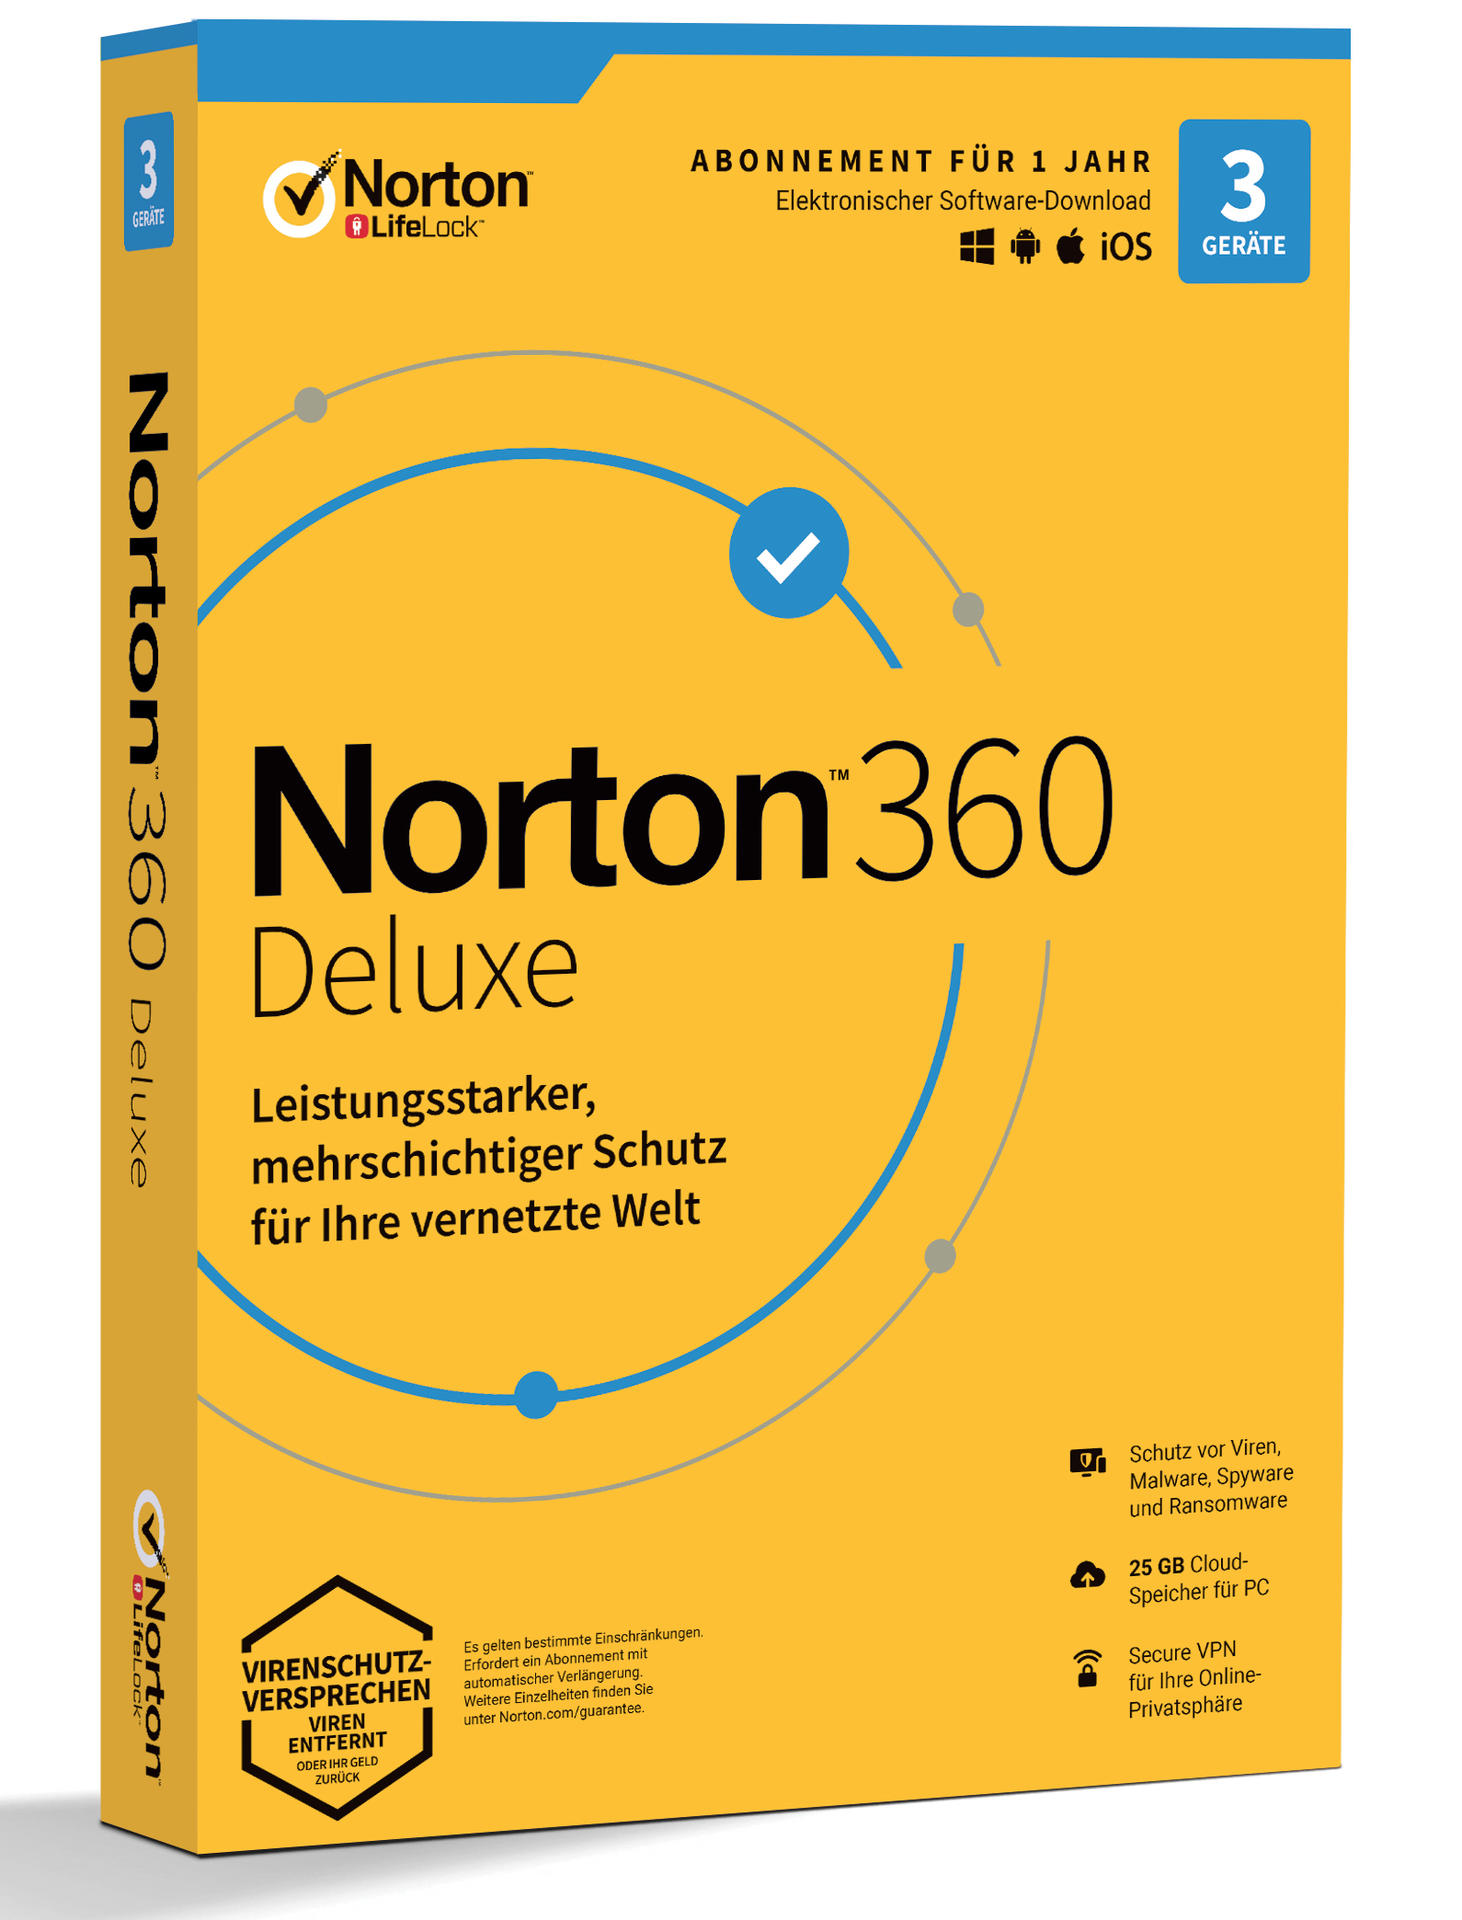 Norton 360 1 Jahr iOS, Android) 3 Geräte Deluxe - - 25GB (PC, MAC, - Benutzer - Cloud-Speicher 1